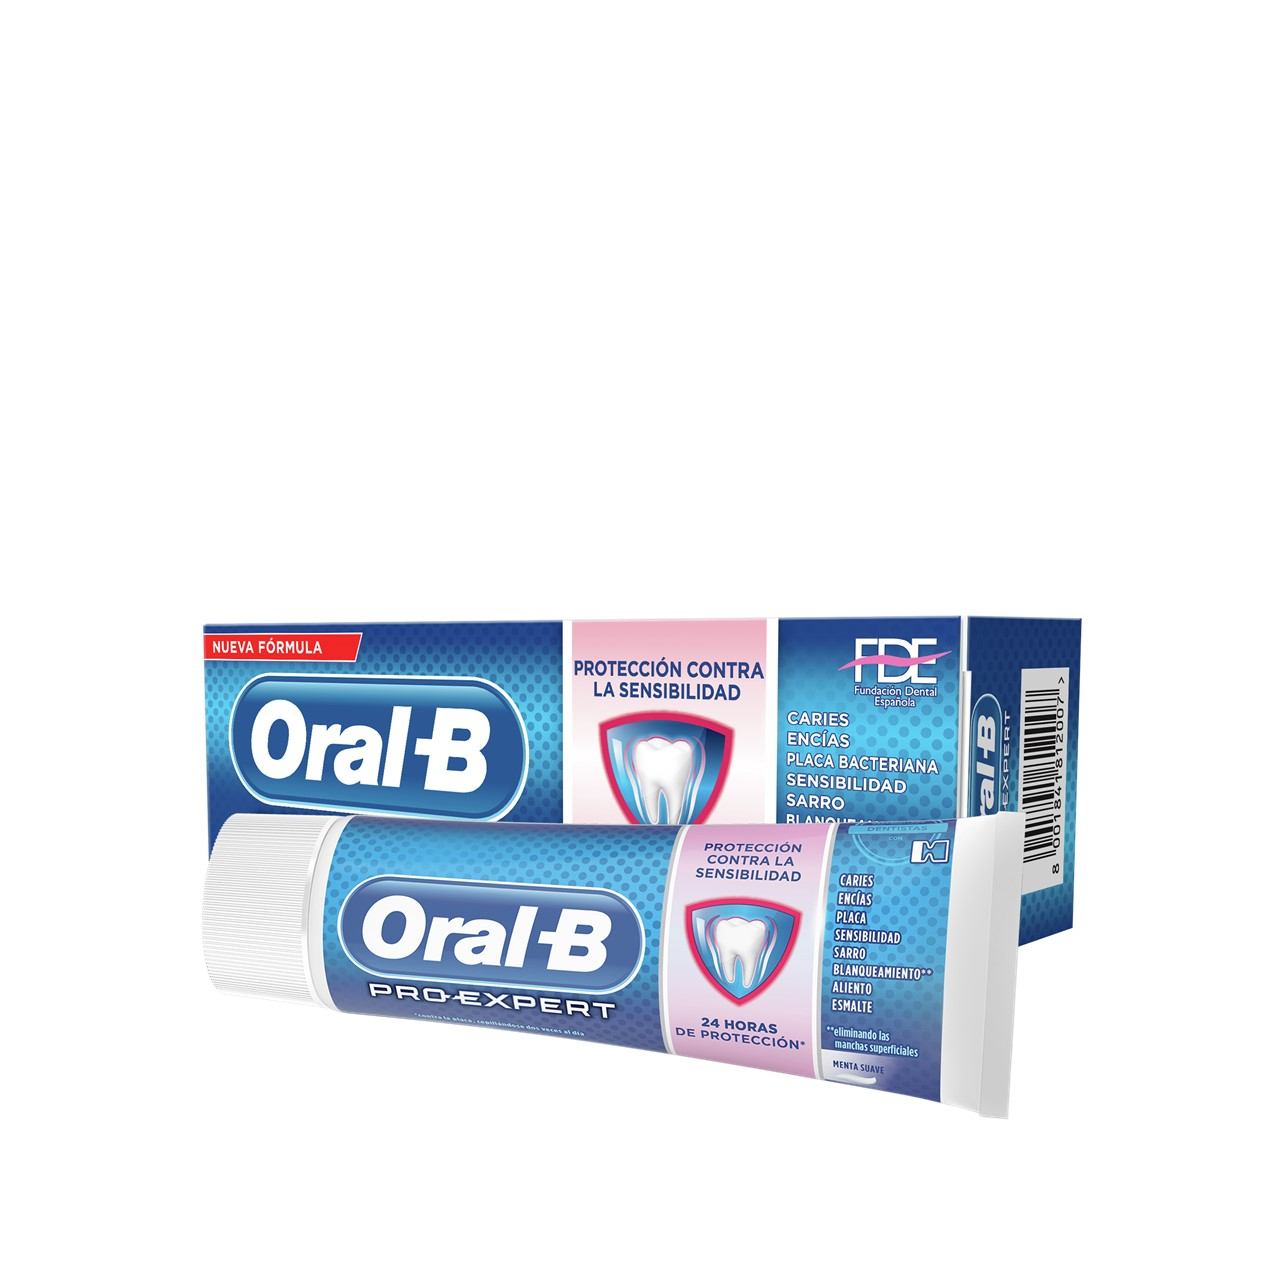 Oral-B Pro-Expert Sensitive & Gentle Whitening Toothpaste